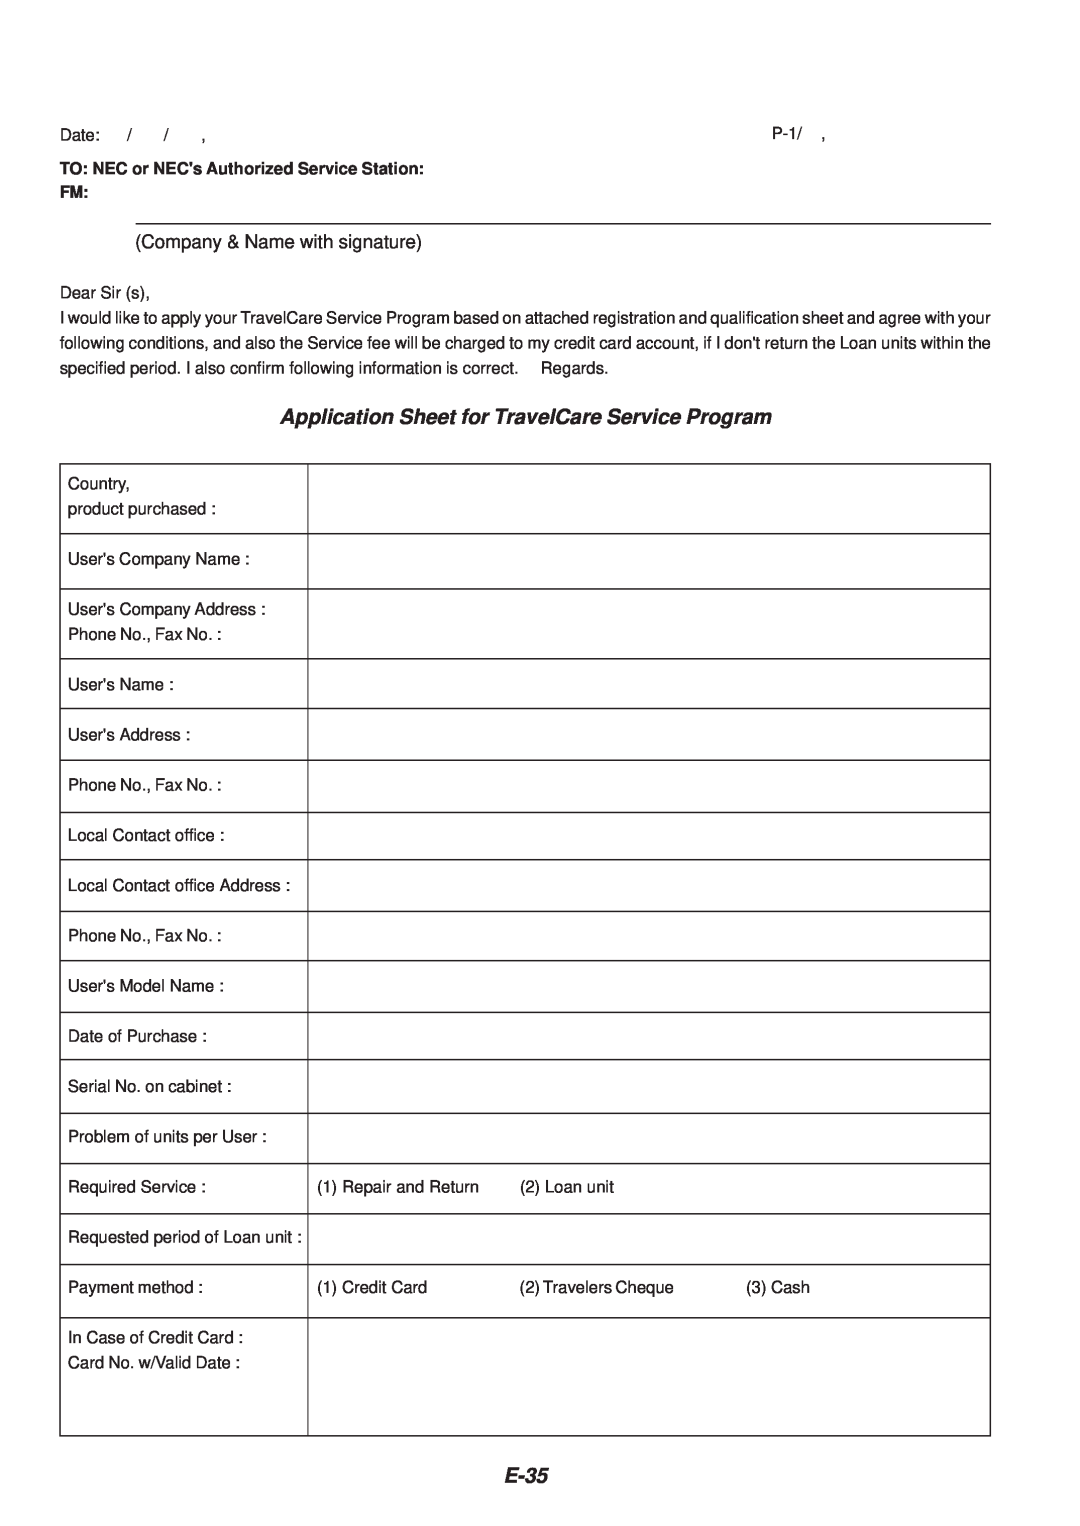 NEC VT46 user manual Application Sheet for TravelCare Service Program, E-35, Company & Name with signature 